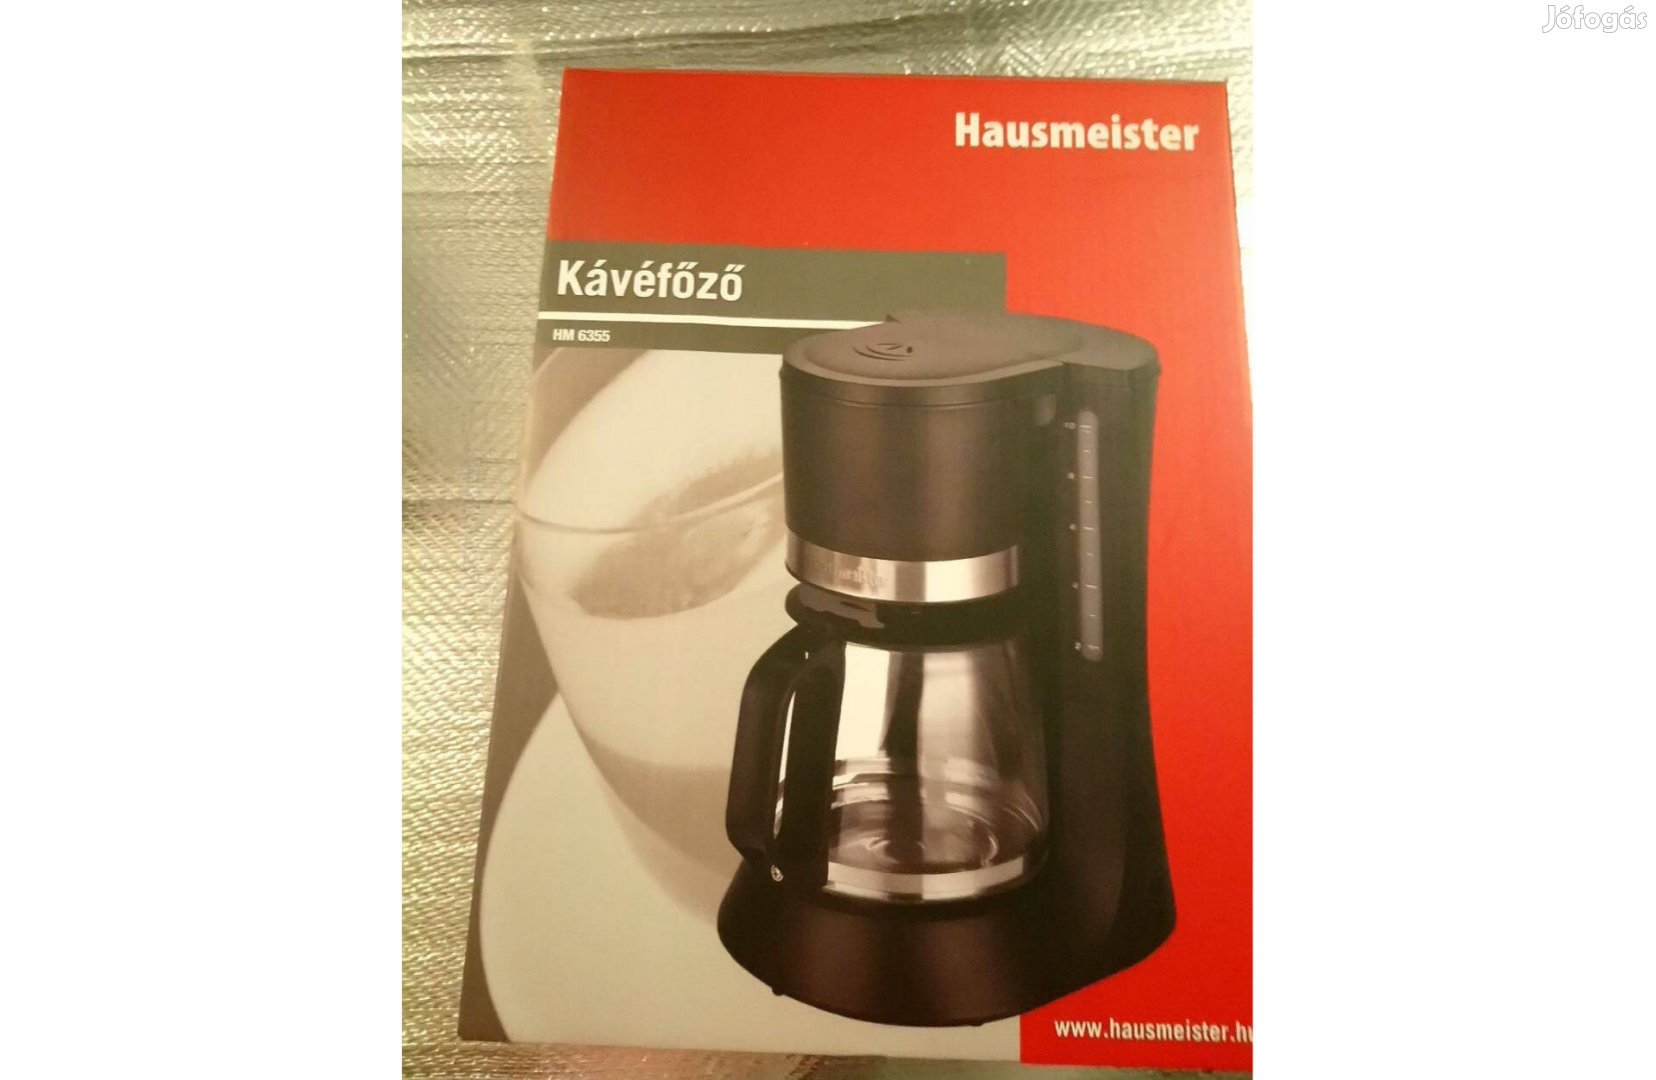 Hausmeister HM 6355 filteres kávéfőző